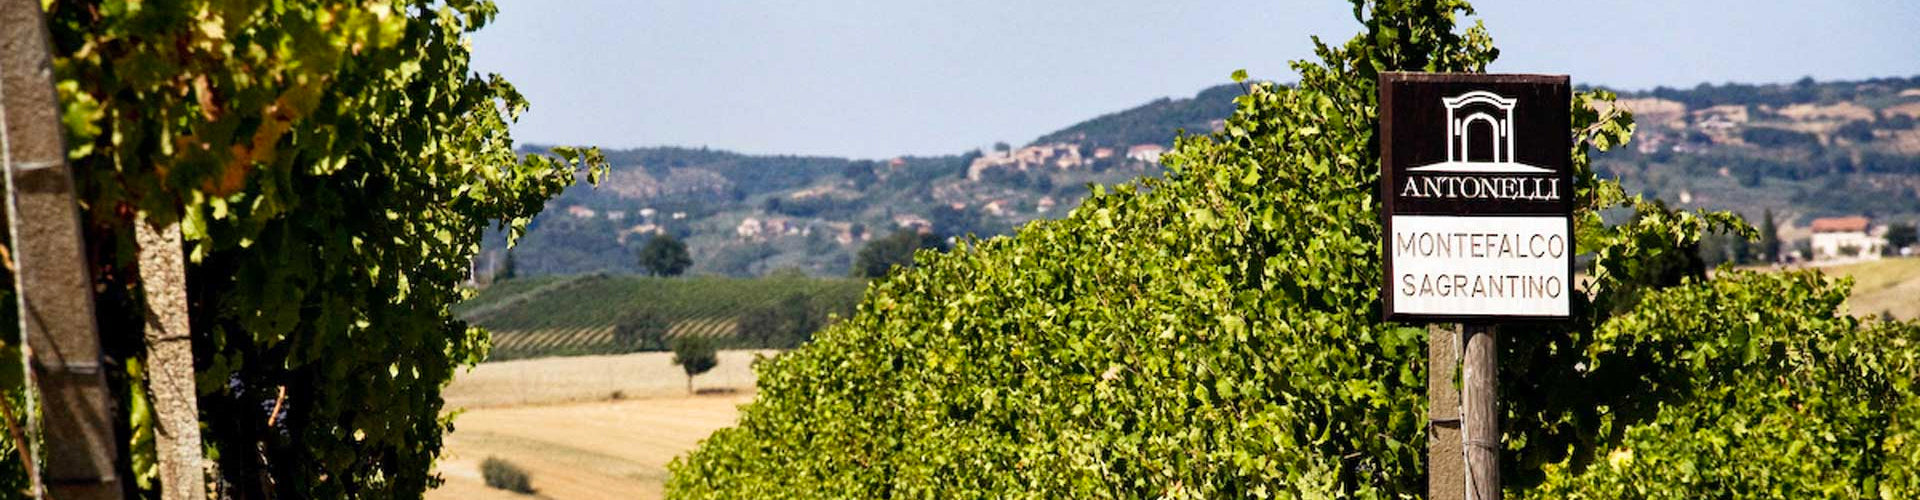 Antonelli Sagrantino Vineyards in Montefalco